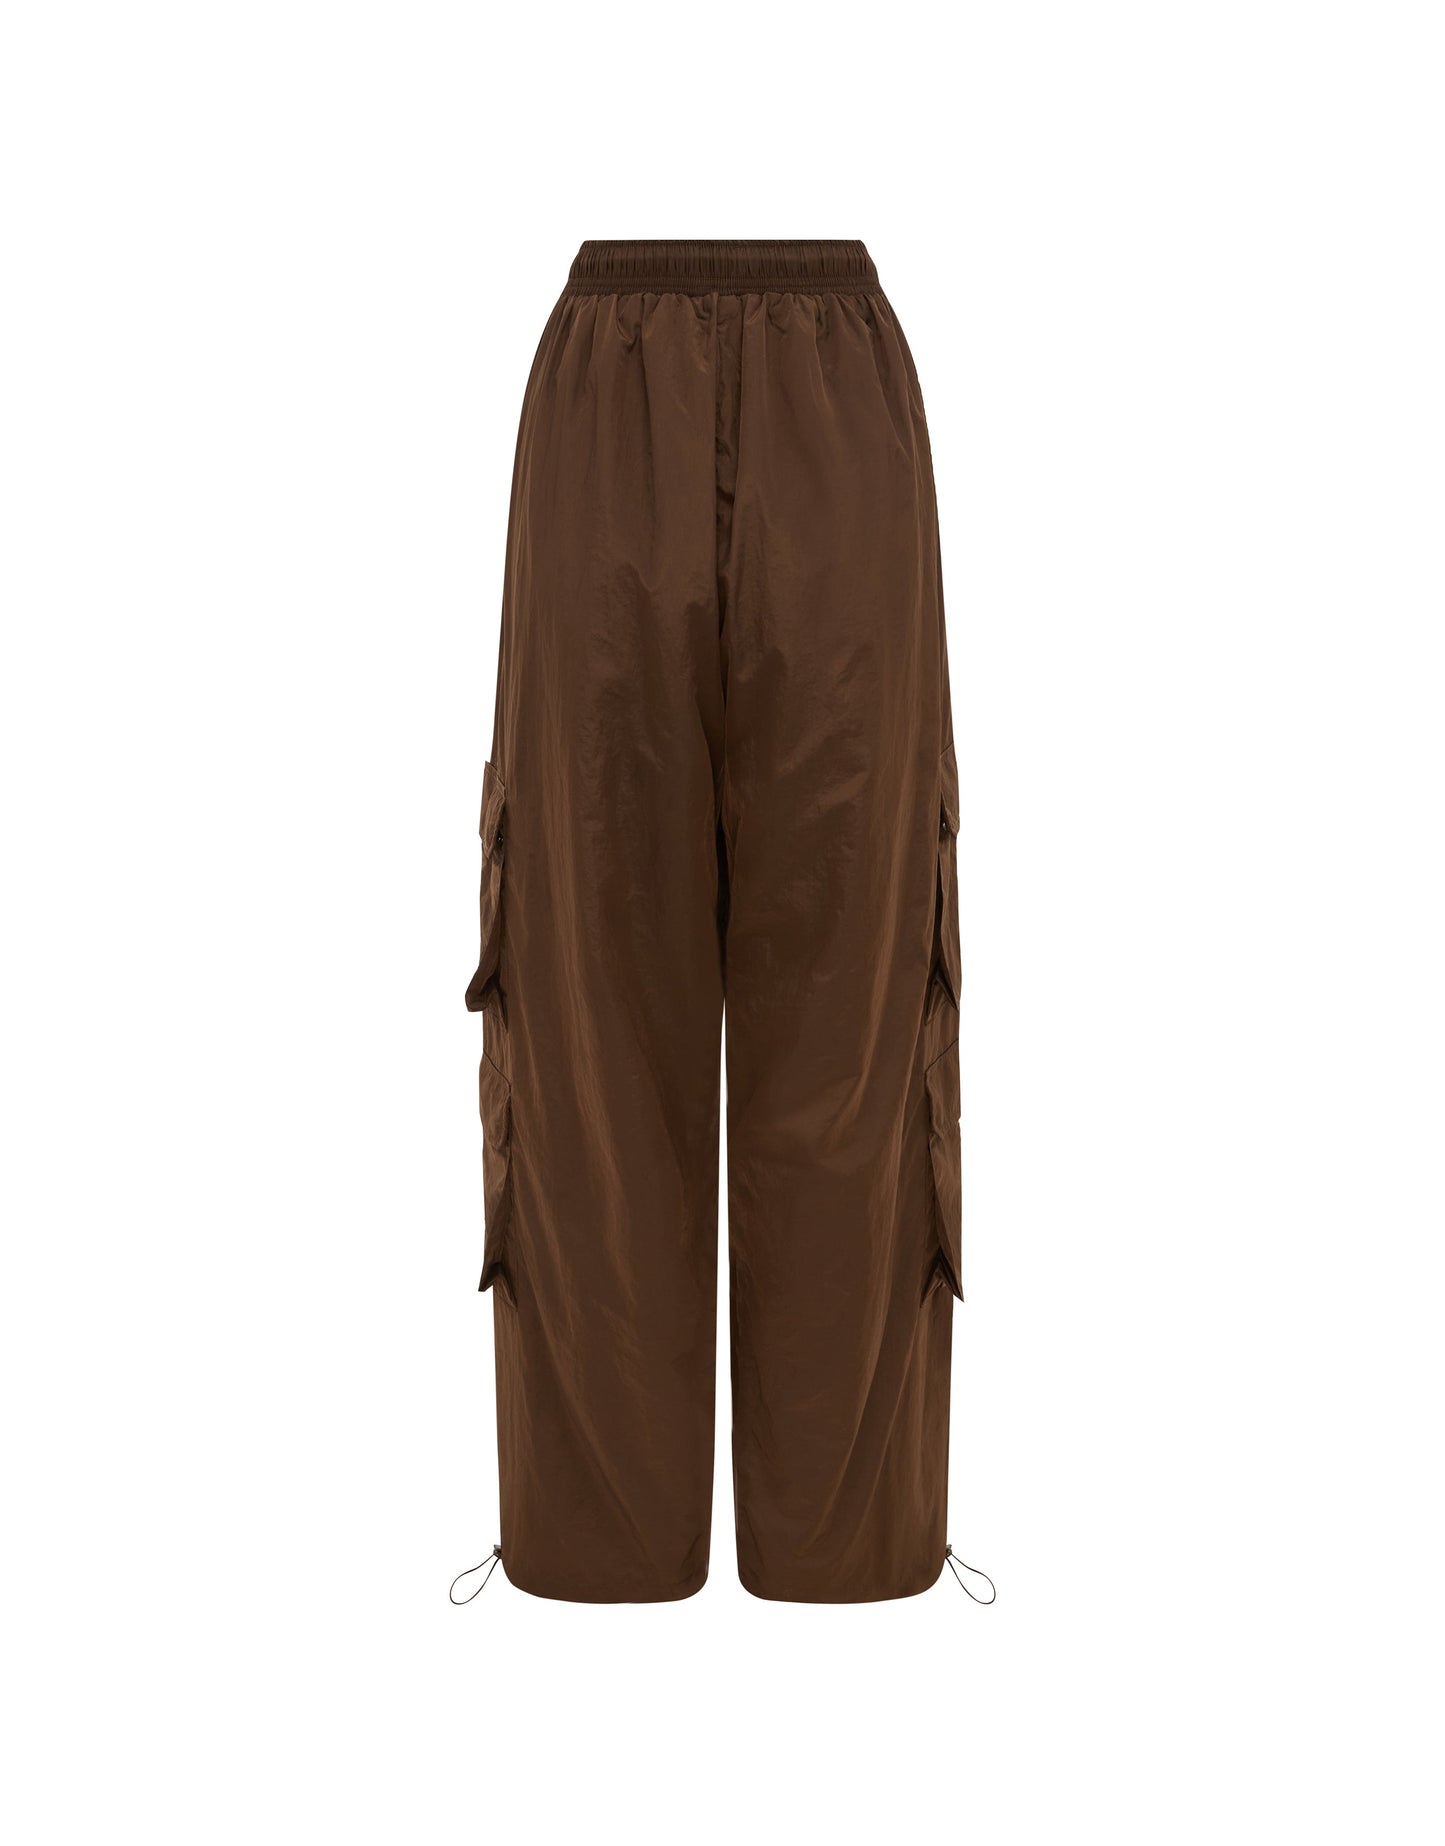 AW Crete Parachute Pants- Tuscan (Brown)